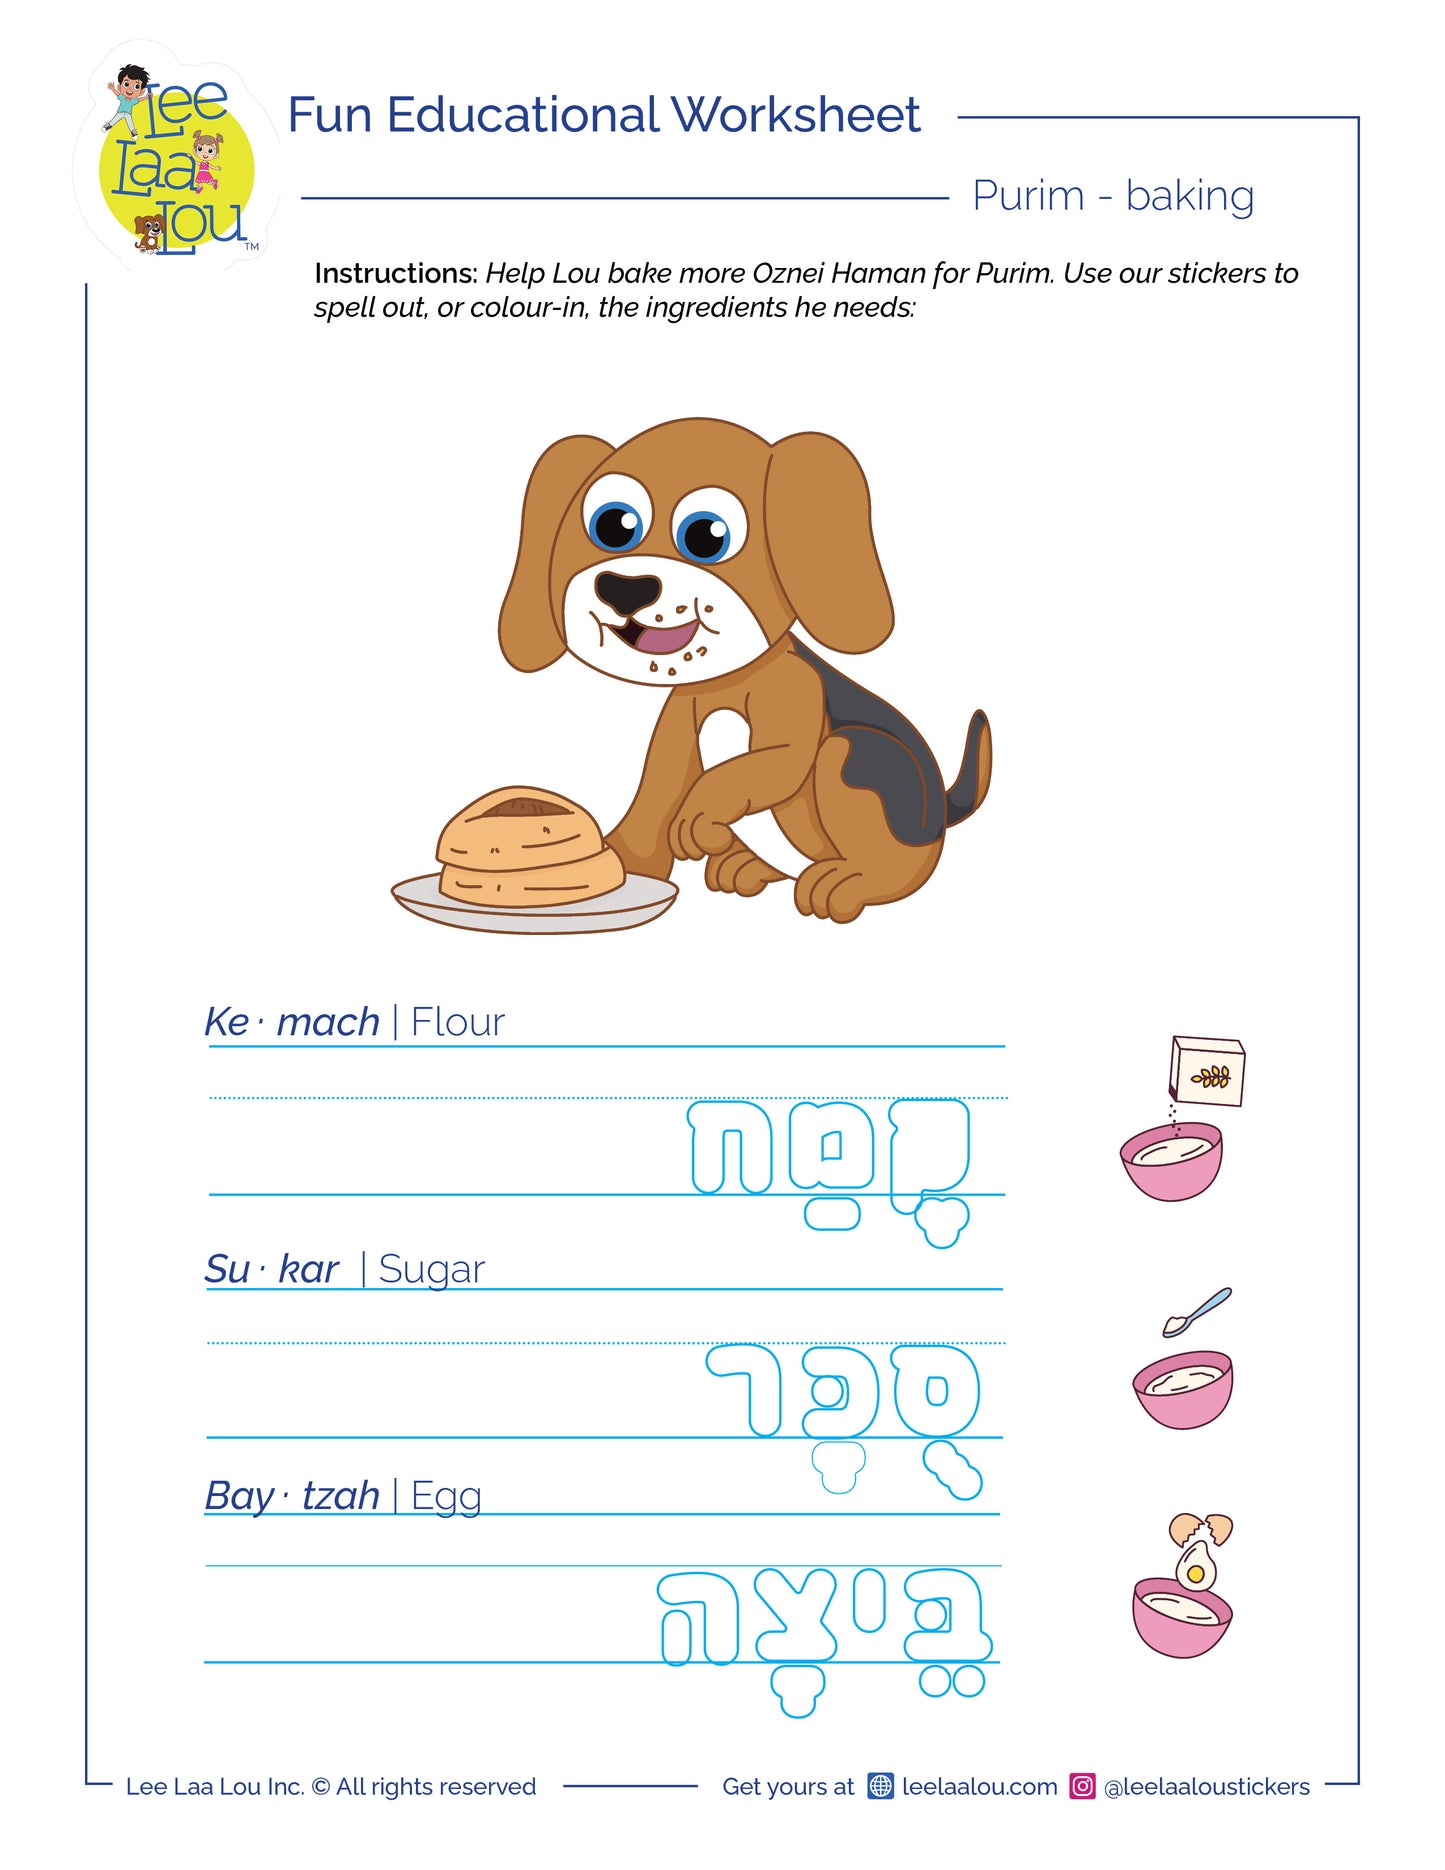 Purim activity worksheet for kids